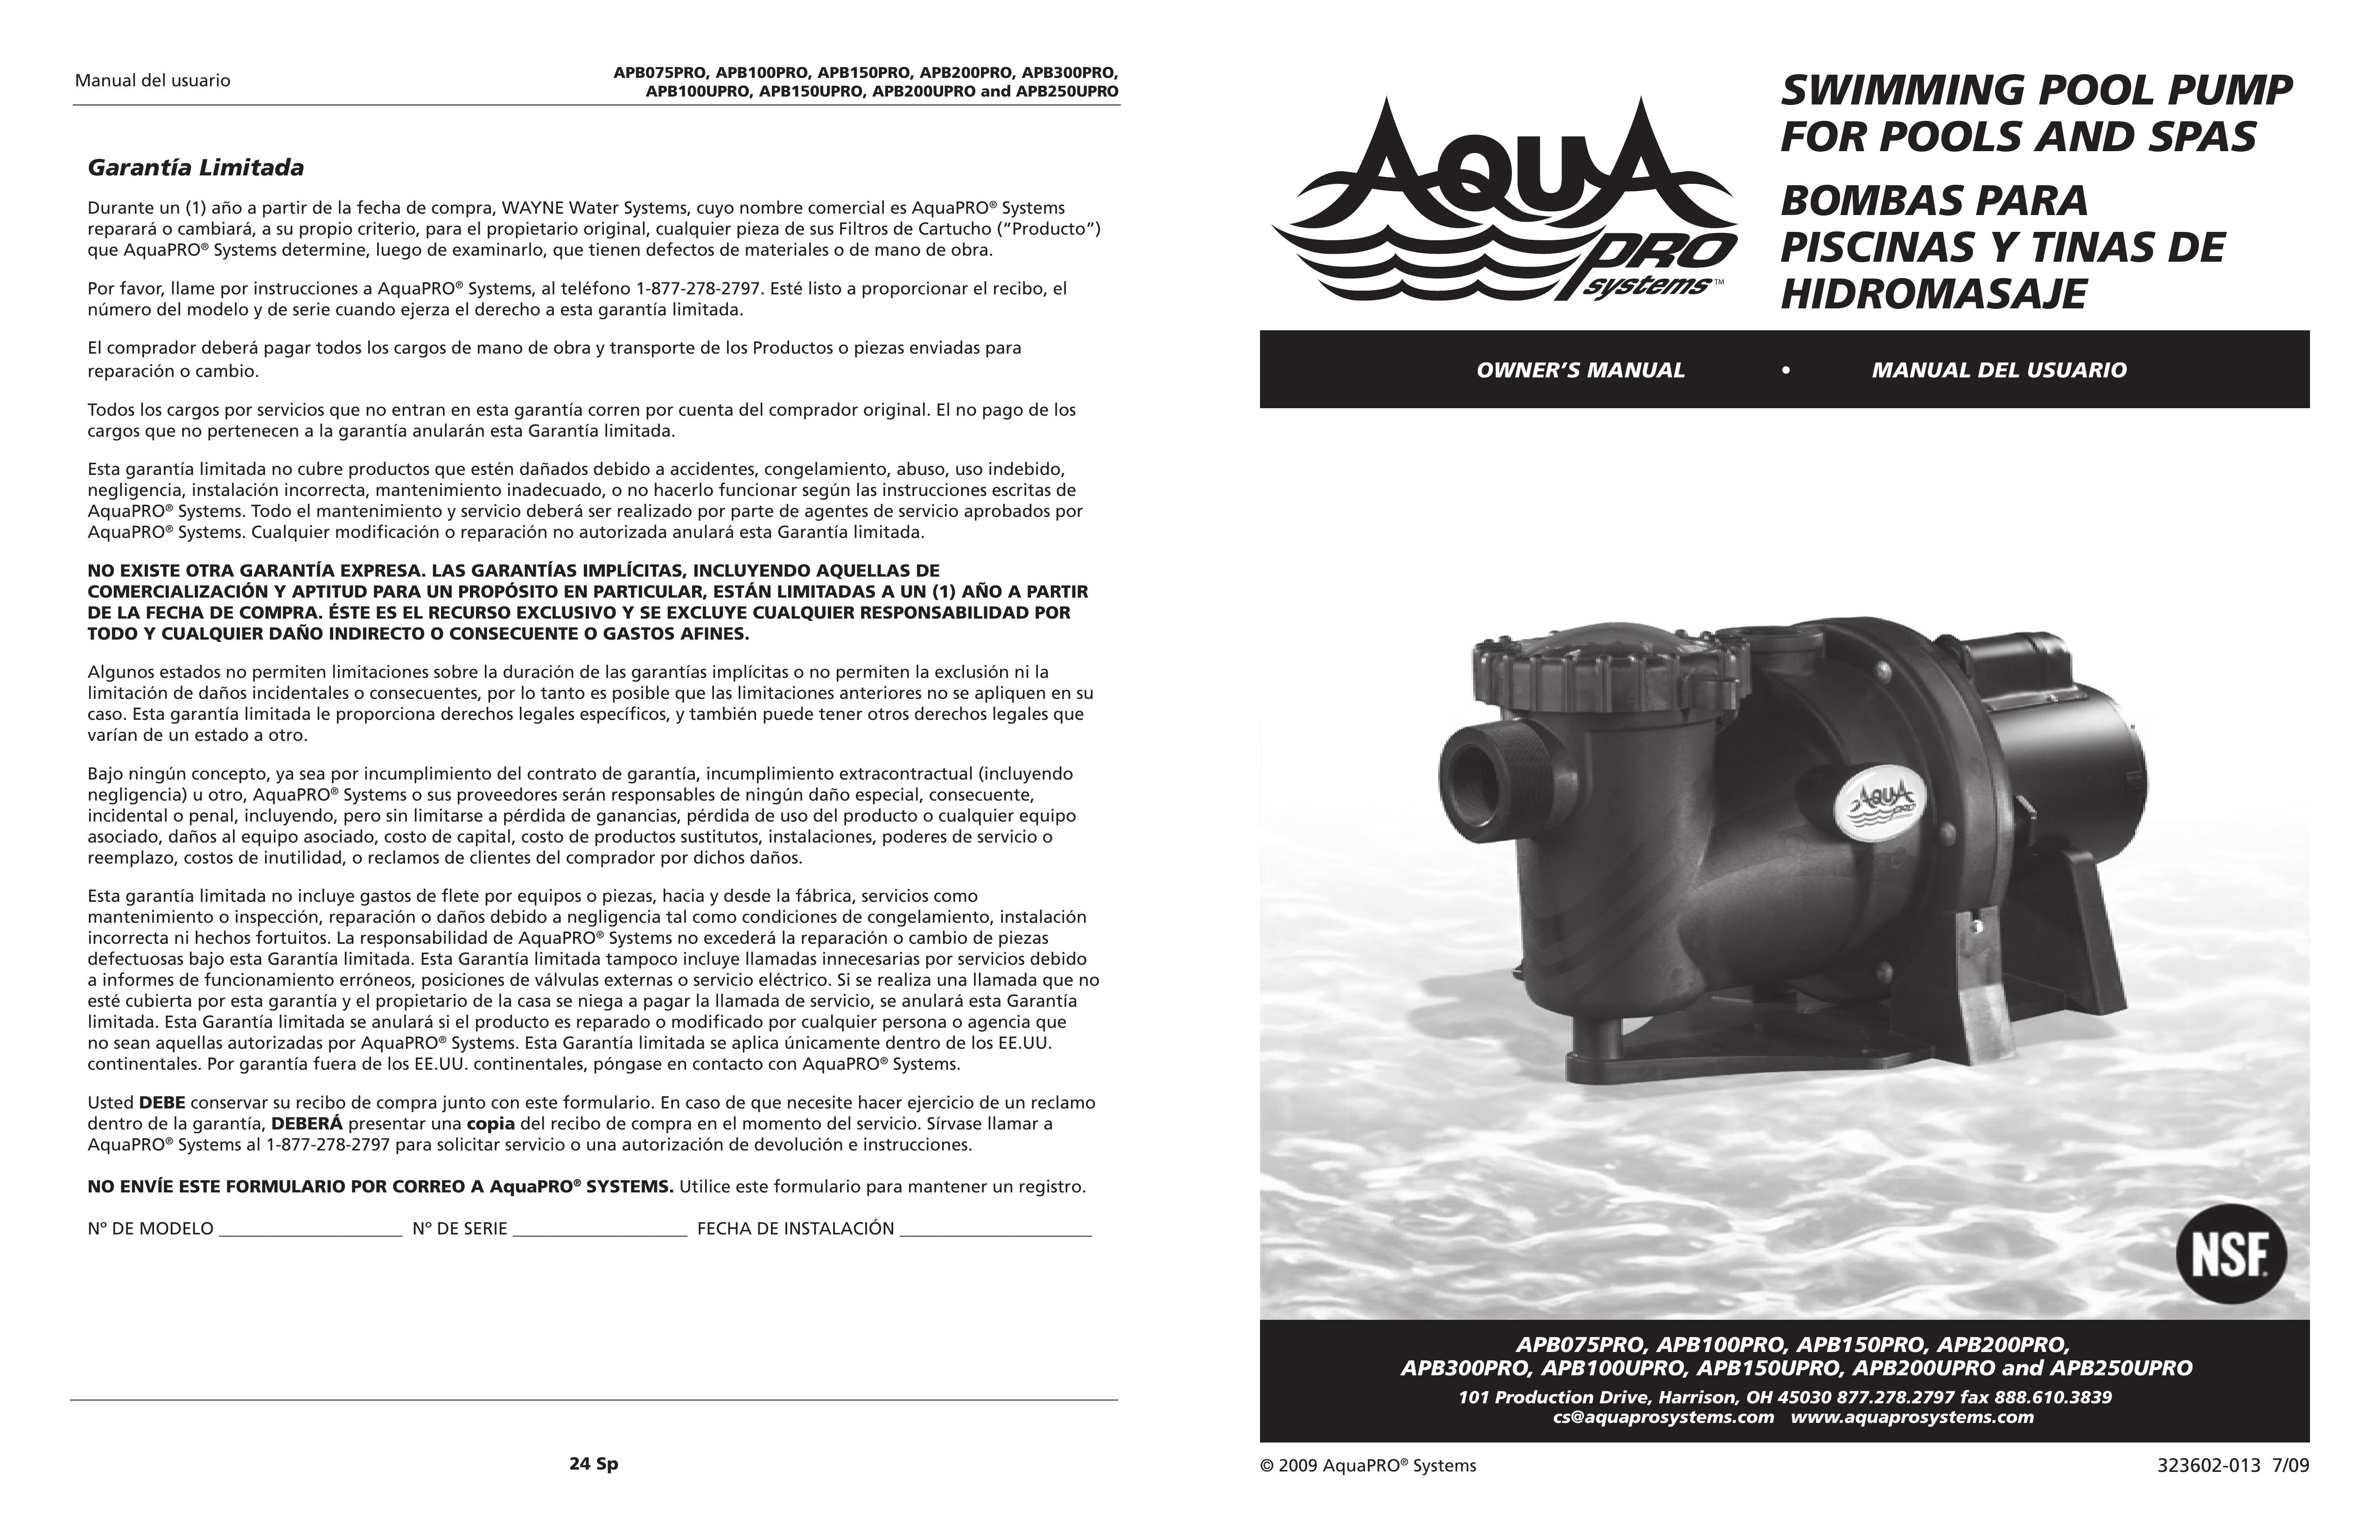 AquaPRO APB075PRO Swimming Pool Pump User Manual